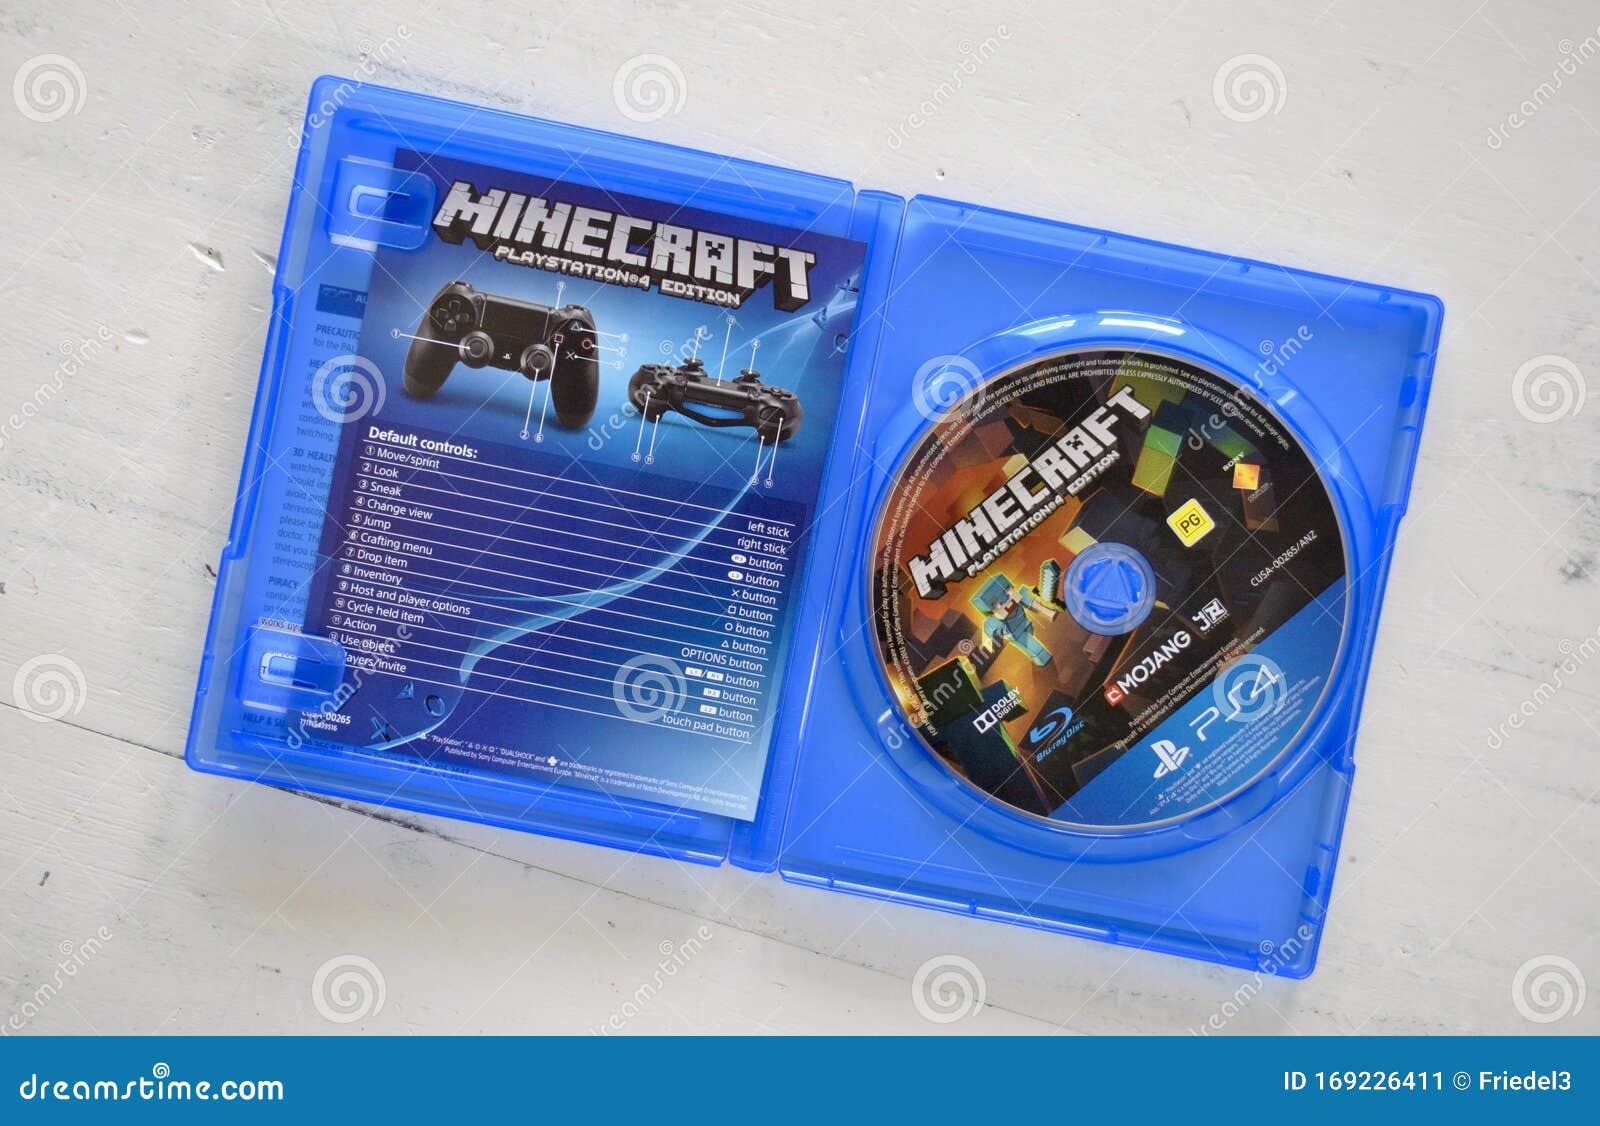 Minecraft - Jogos de PS4